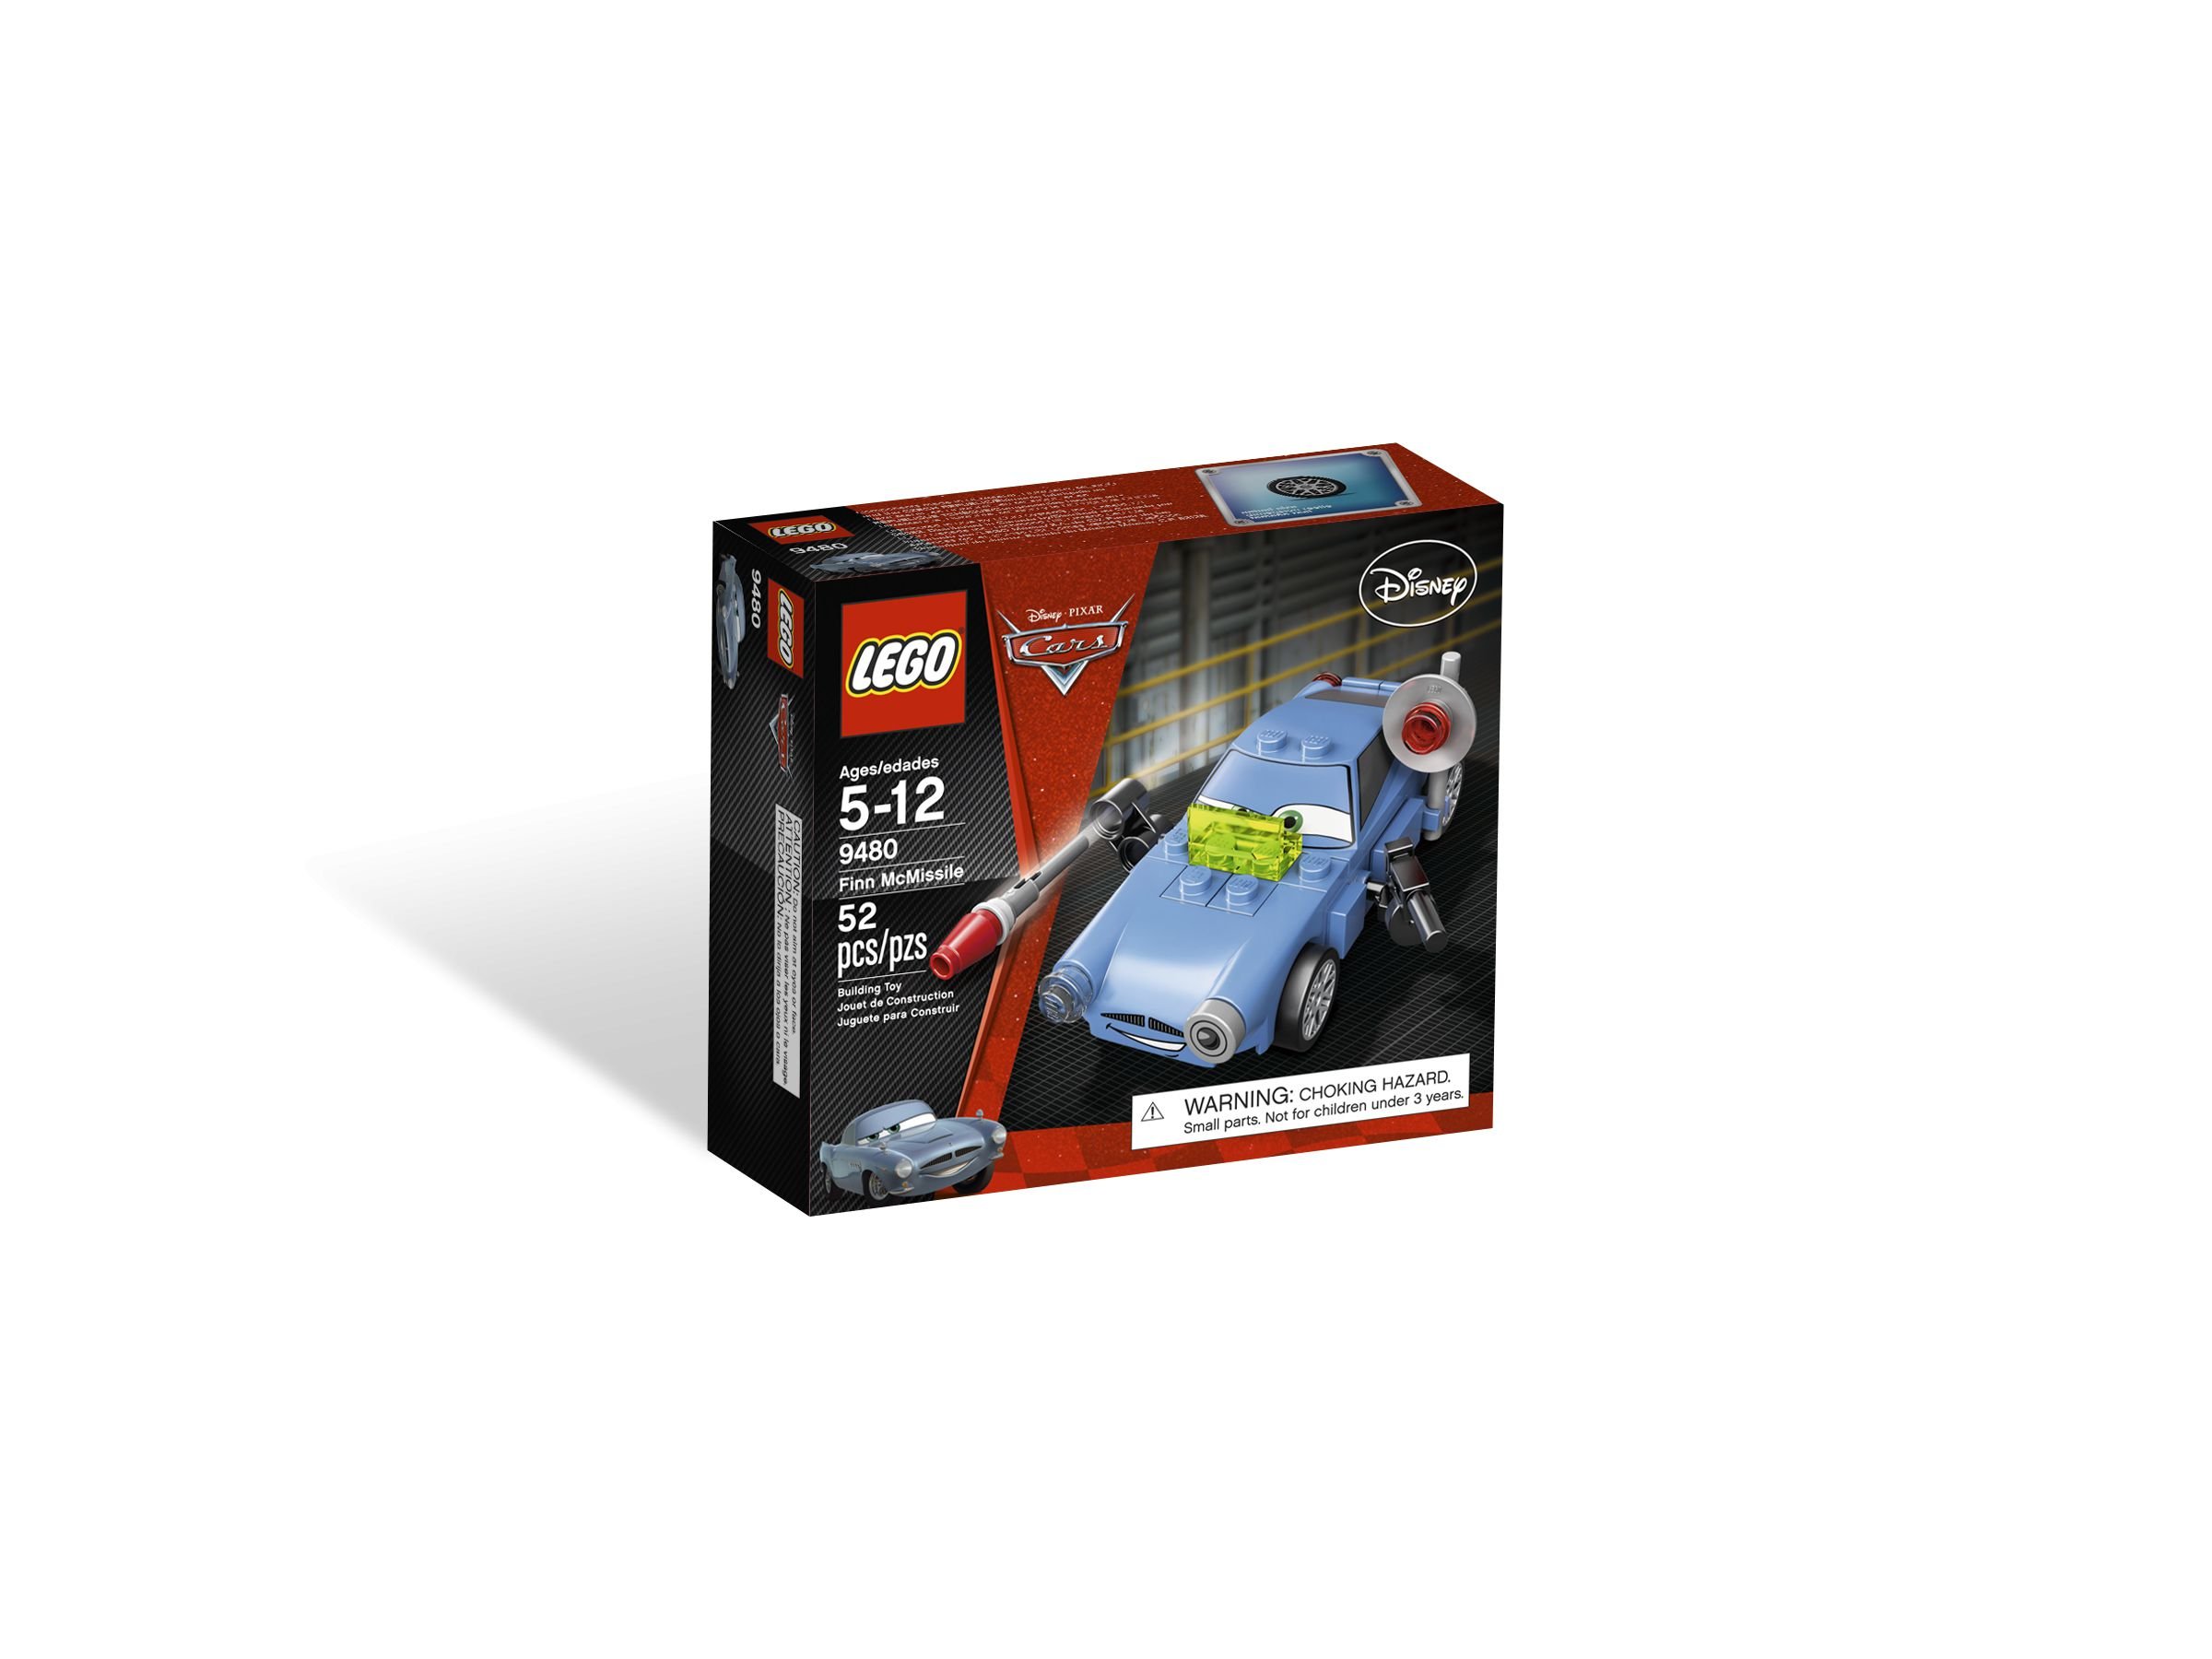 LEGO Cars 9480 Finn McMissile LEGO_9480_alt1.jpg